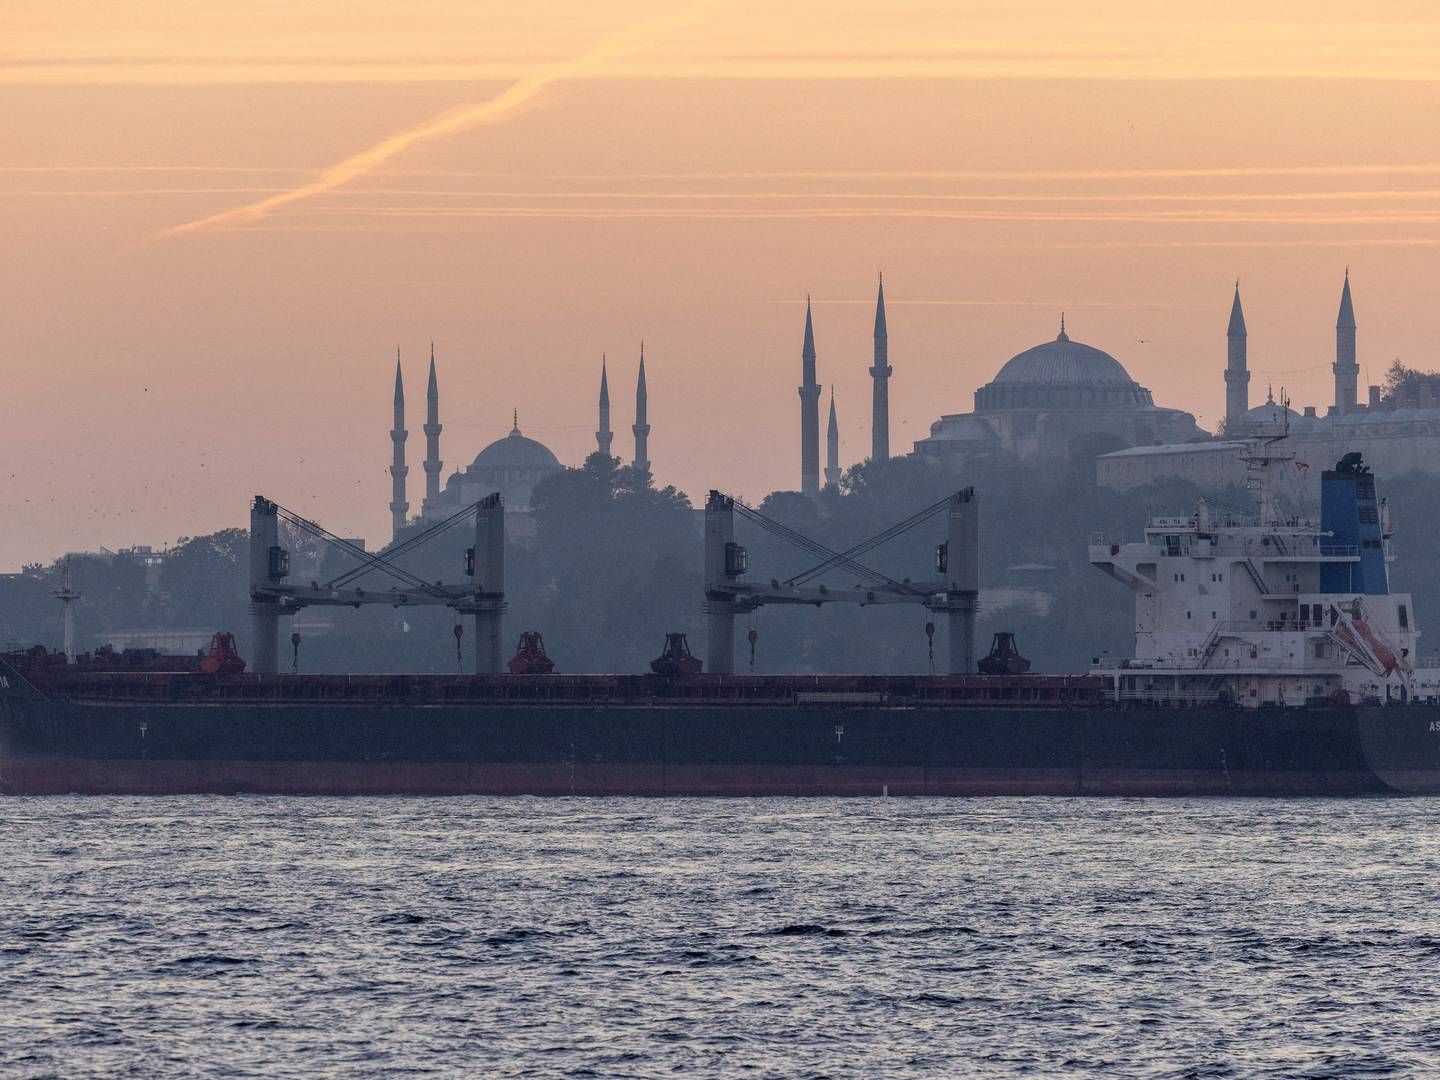 Asl Tia, et tørlastskib der sejler ukrainsk korn sejler forbi Bosporus i Istanbul i Tyrkiet. | Foto: Umit Bektas